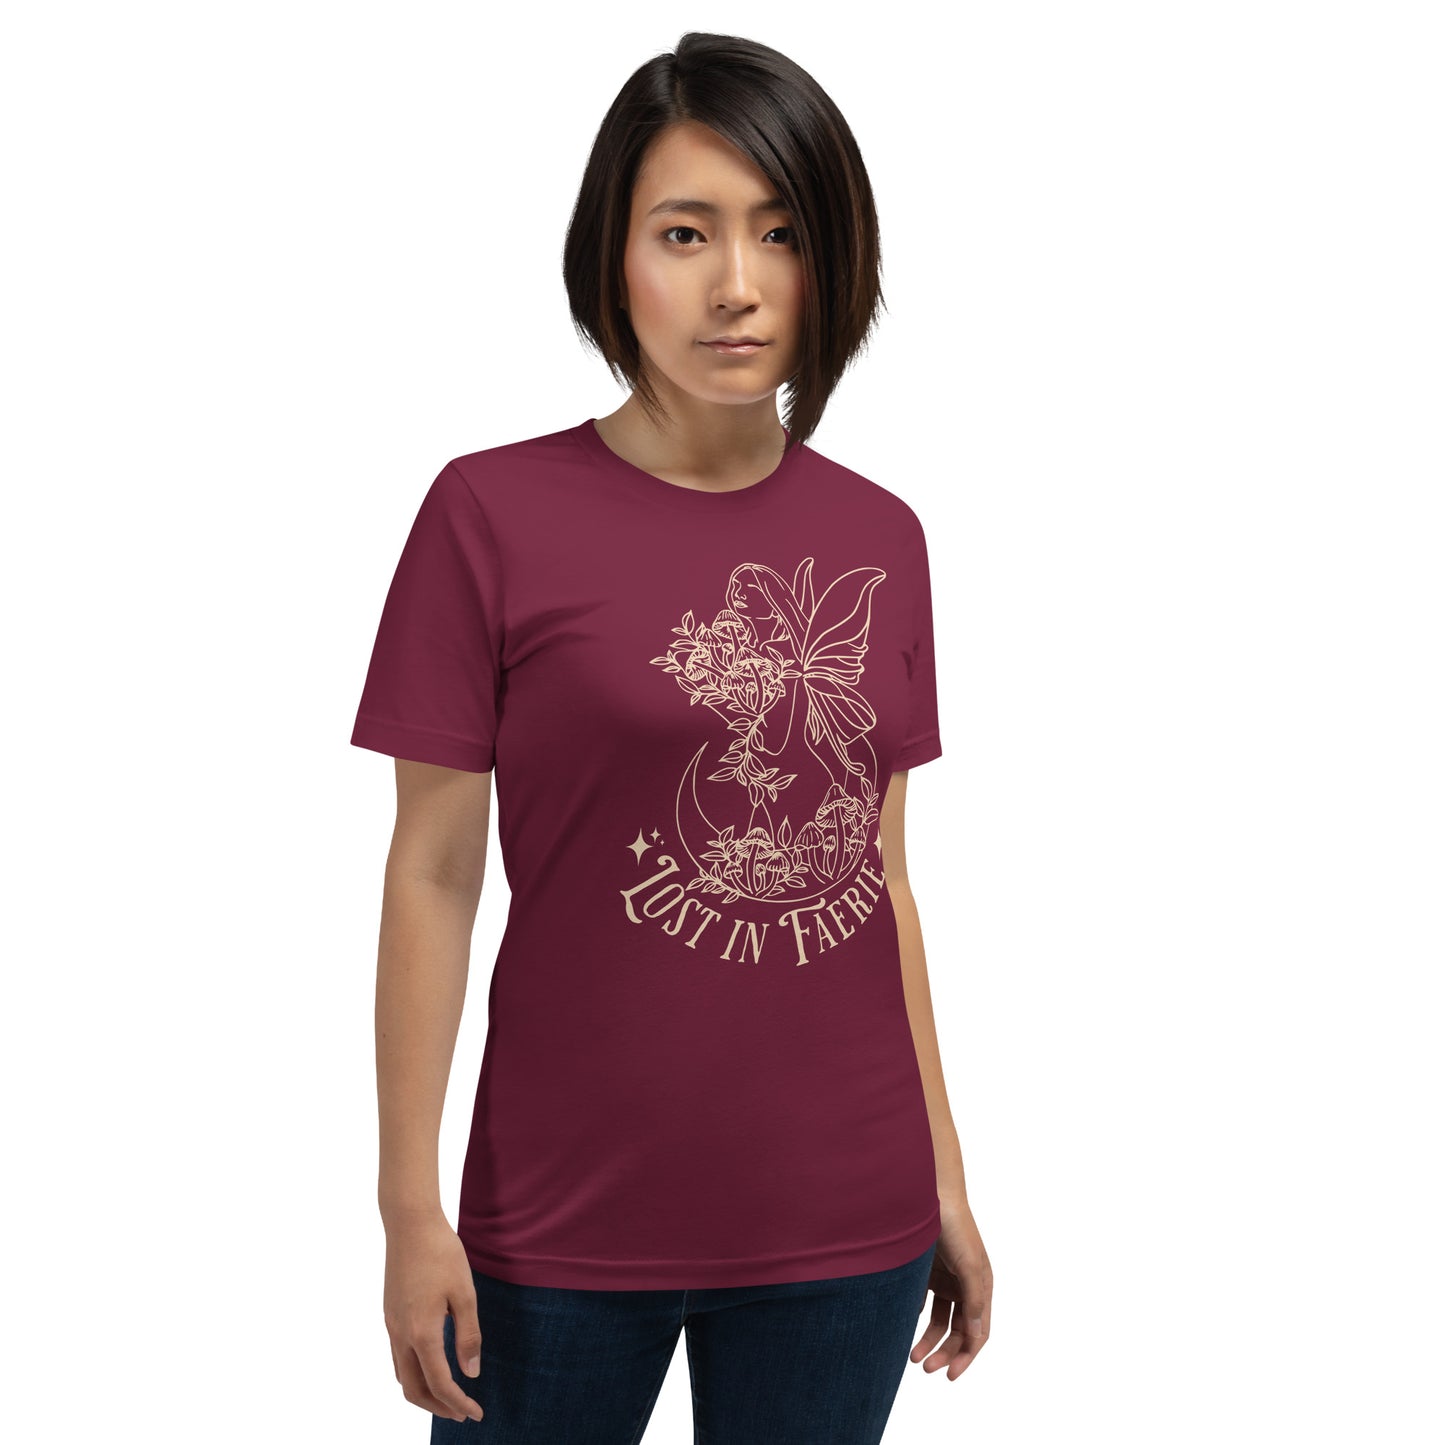 Lost in Faerie Unisex t-shirt - Neutral Design